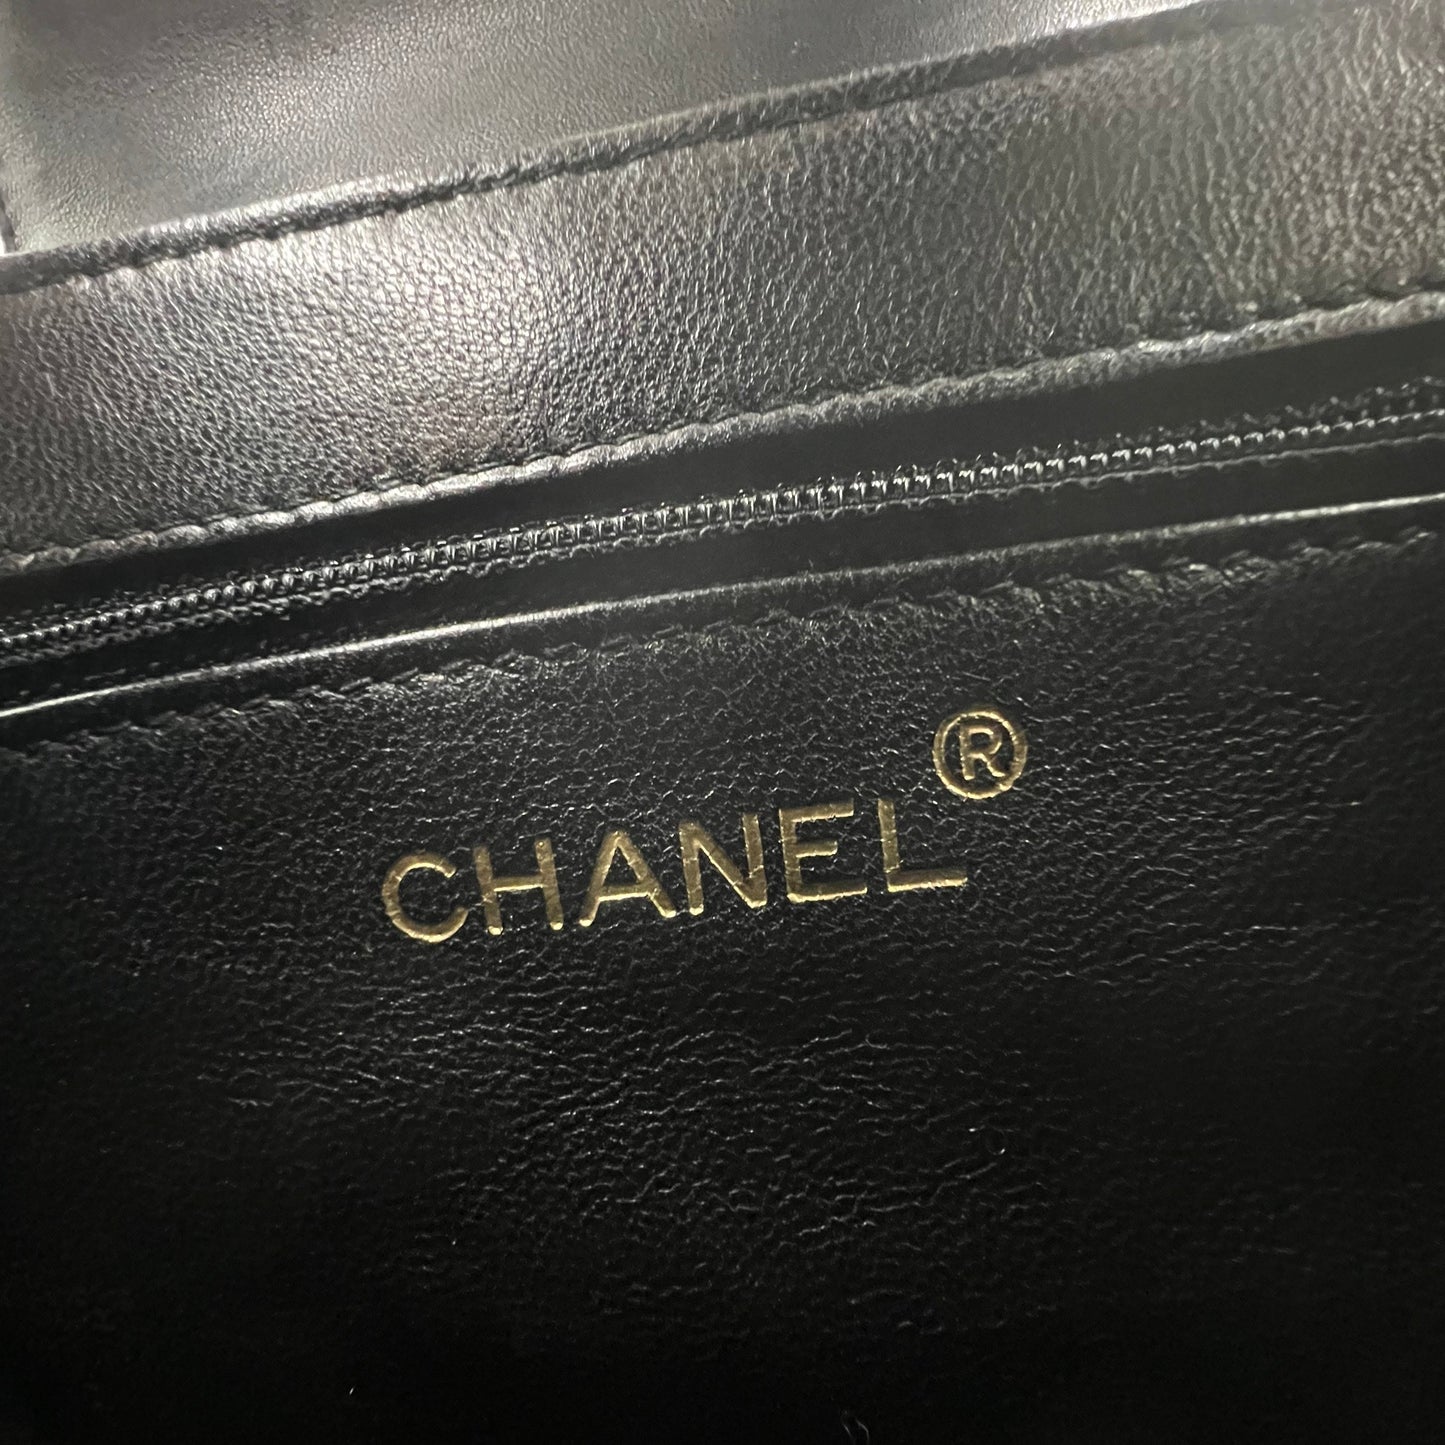 Vintage CHanel BLack Patent leather